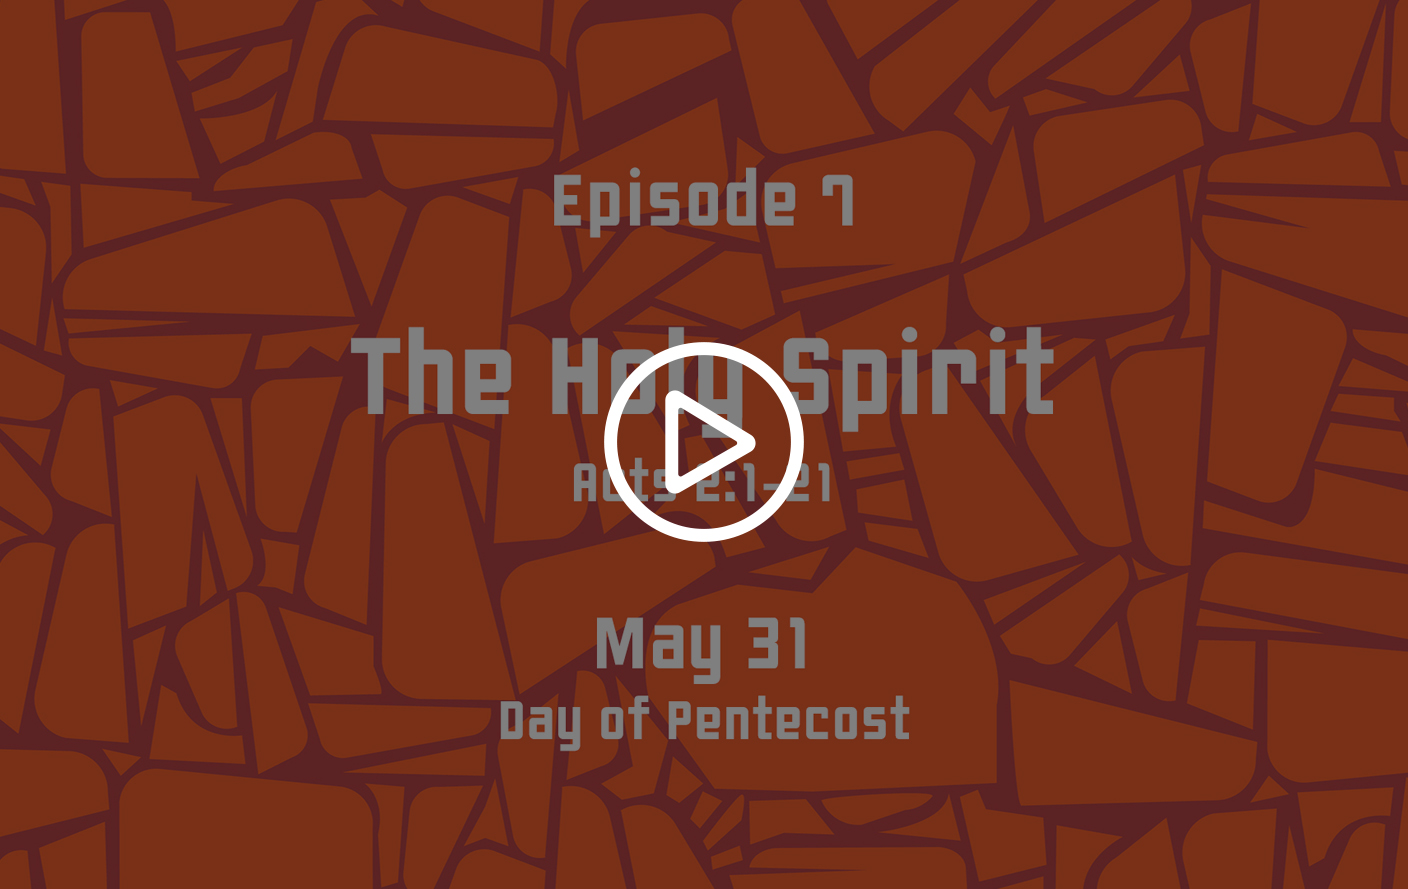 The Holy Spirit video